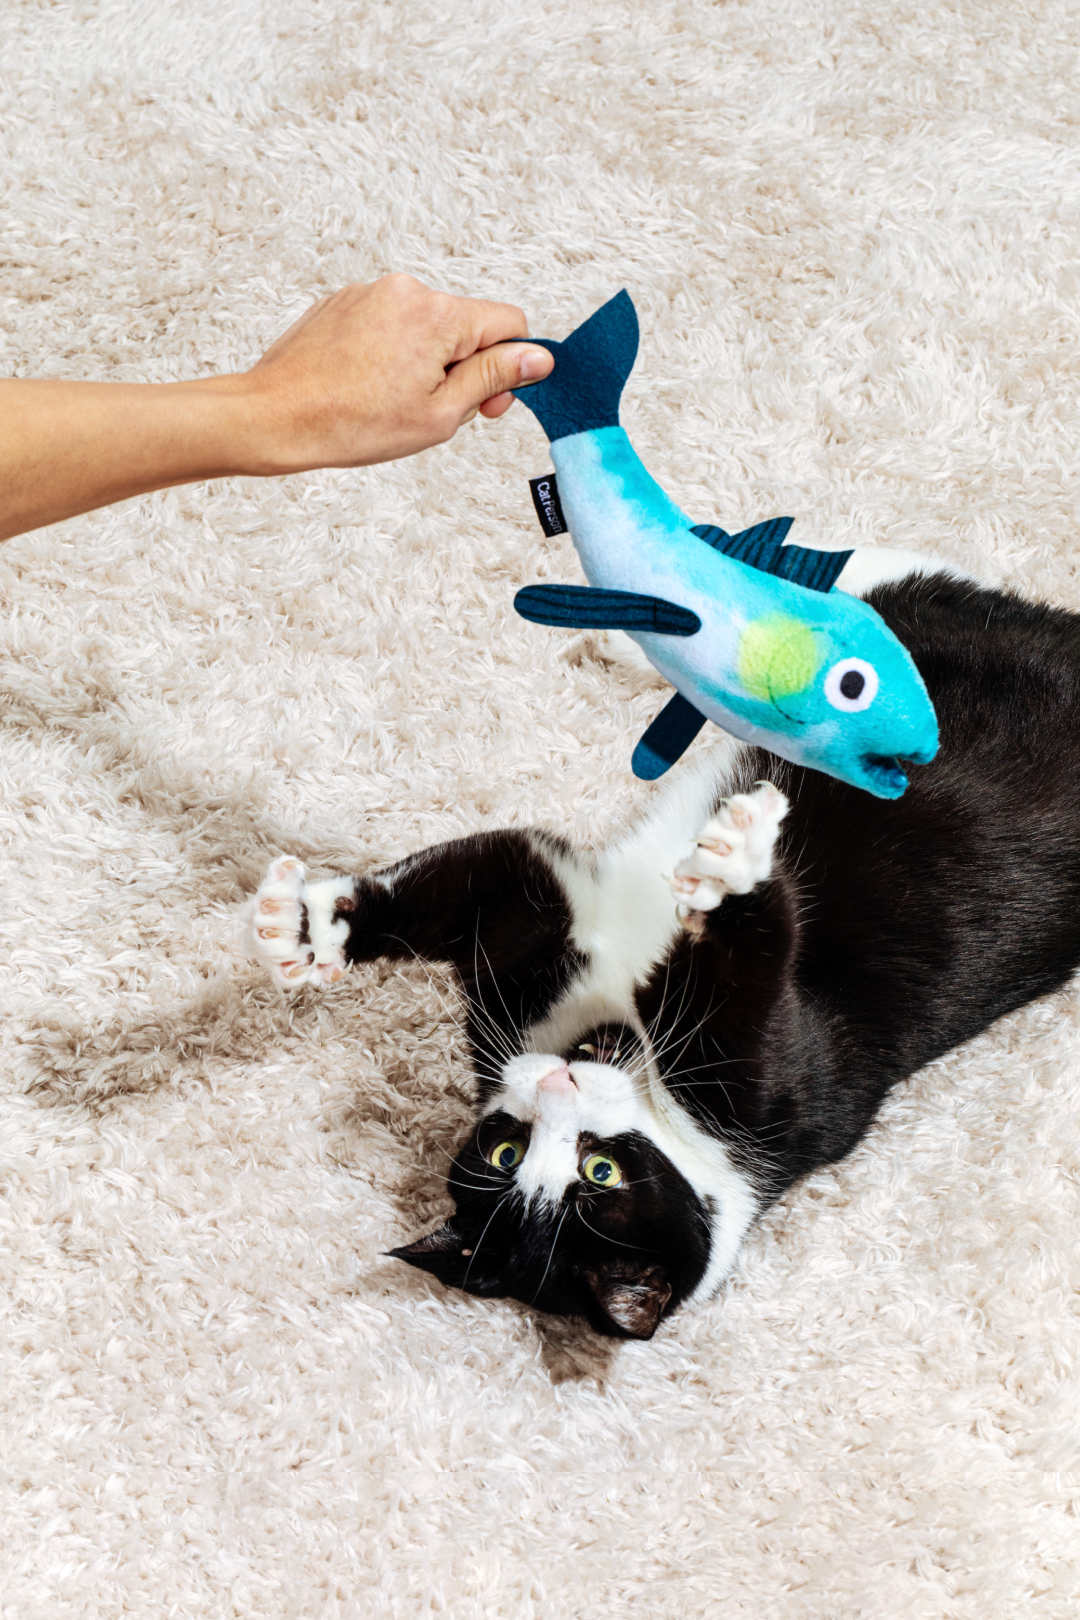 Cat playing with her big tuna cat nip toy